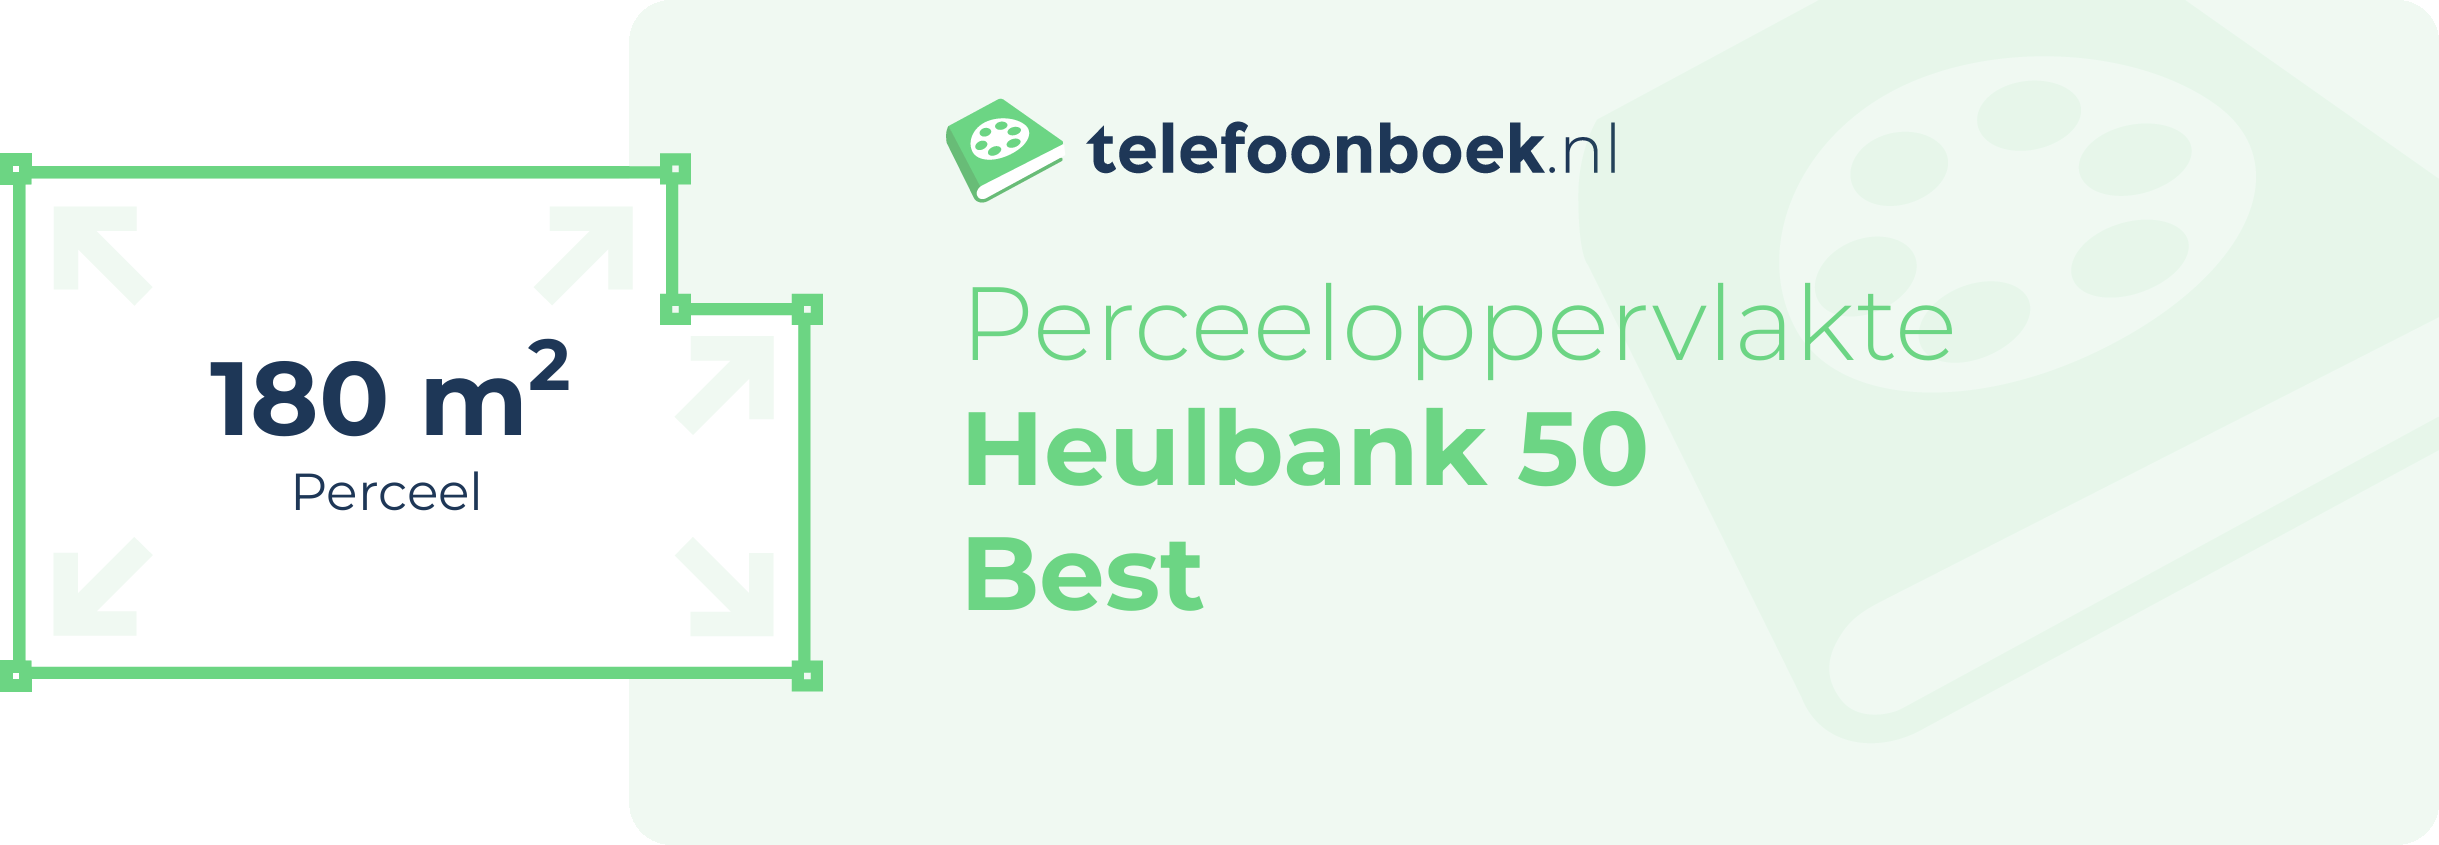 Perceeloppervlakte Heulbank 50 Best